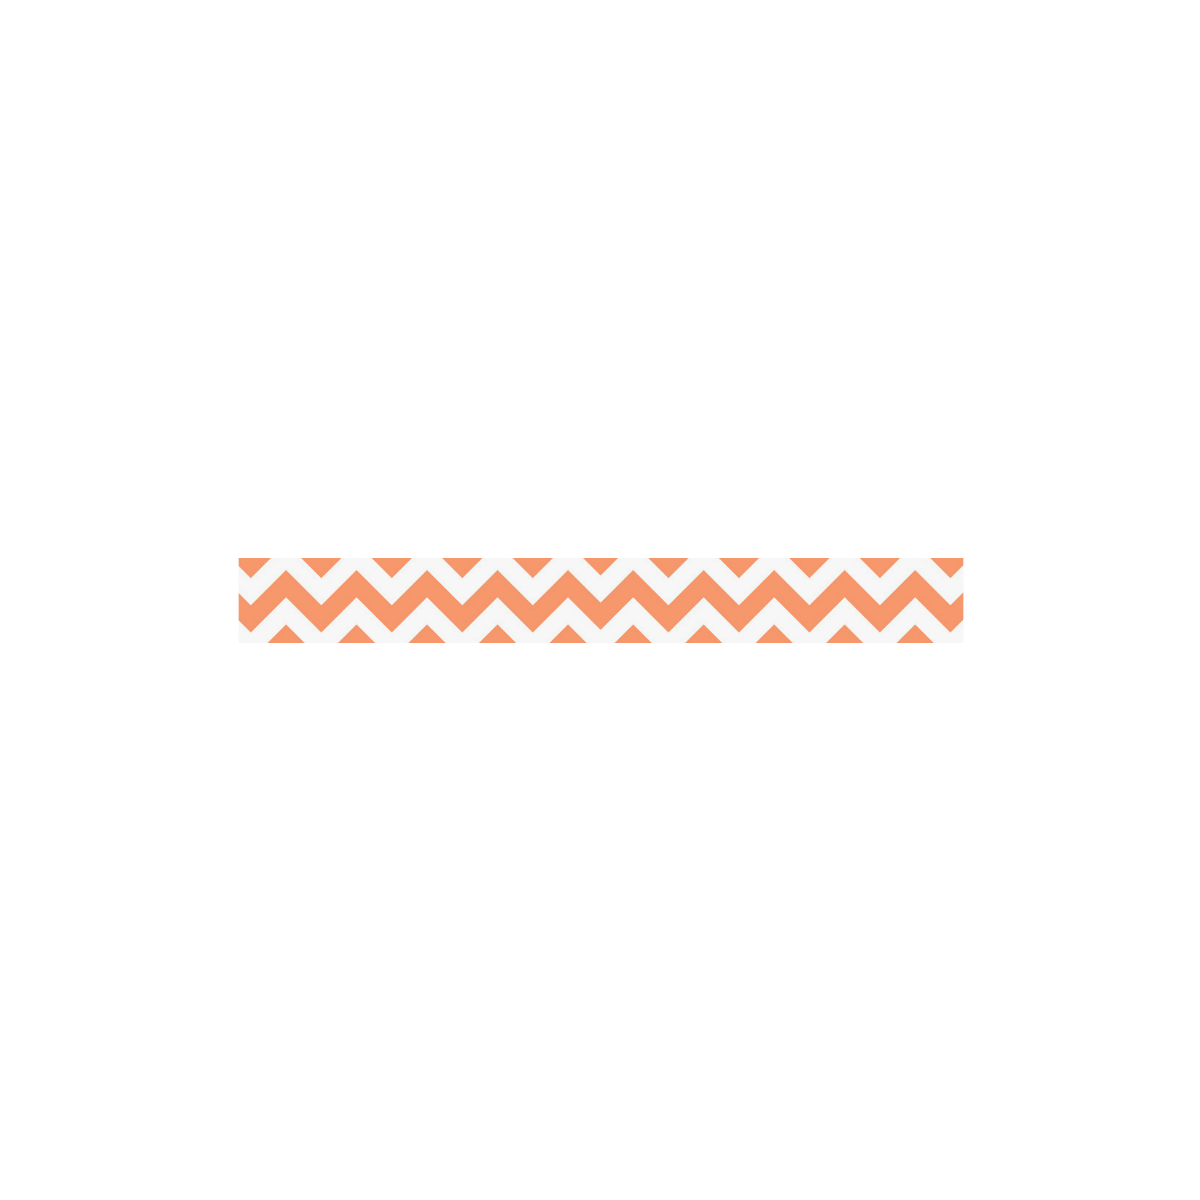 Tangerine Orange zigzag chevron pattern Mnemosyne Women's Crepe Skirt (Model D16)